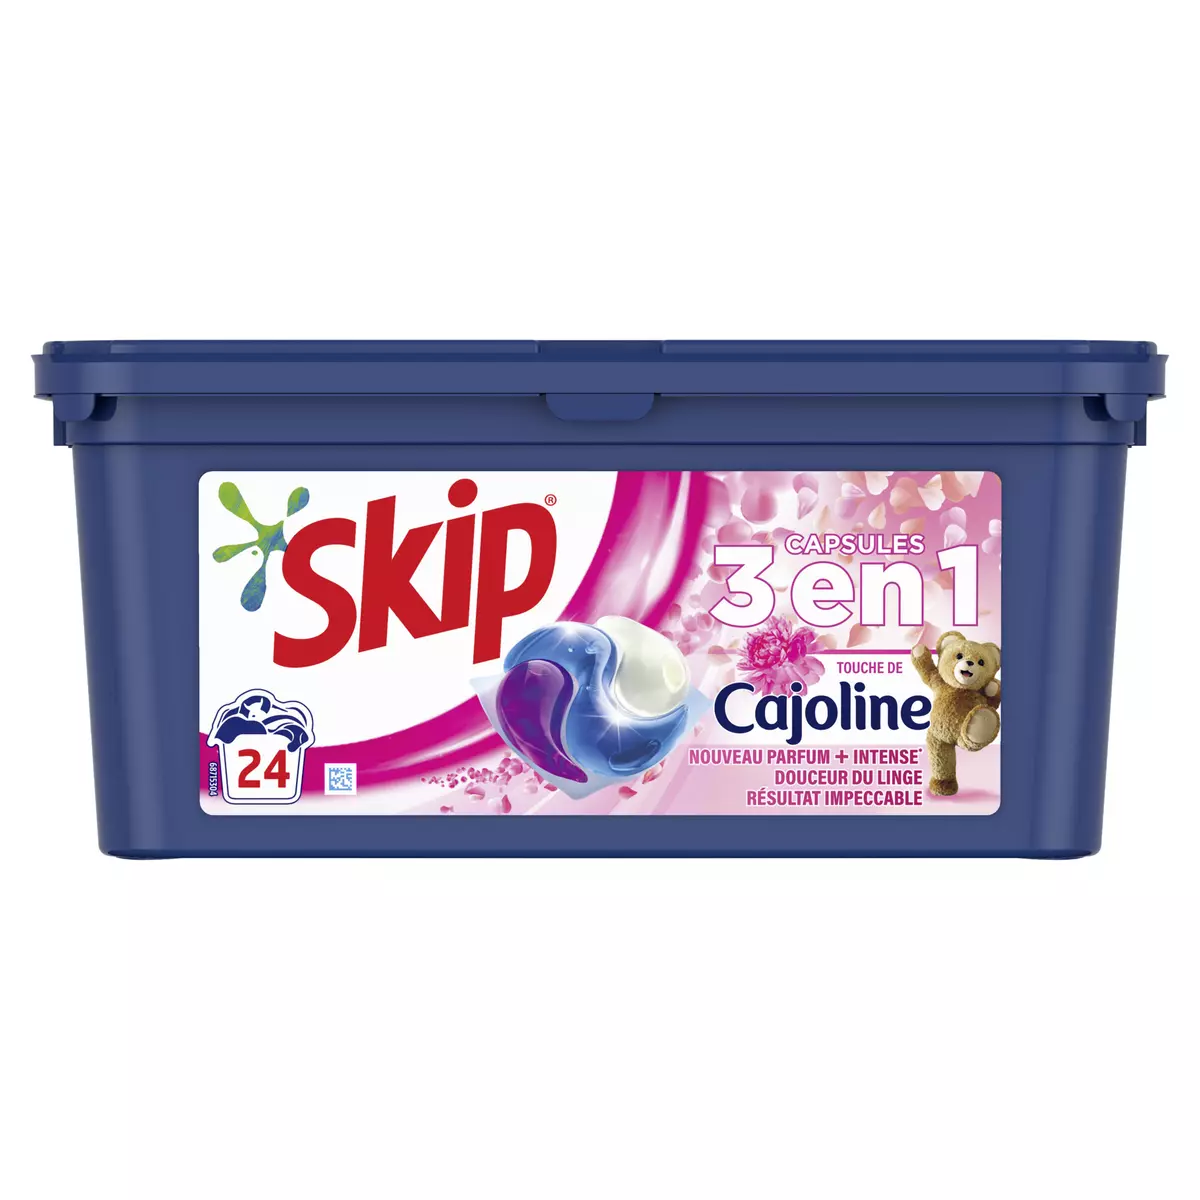 SKIP Capsules de lessive 3 en 1 touche de Cajoline 24 capsules